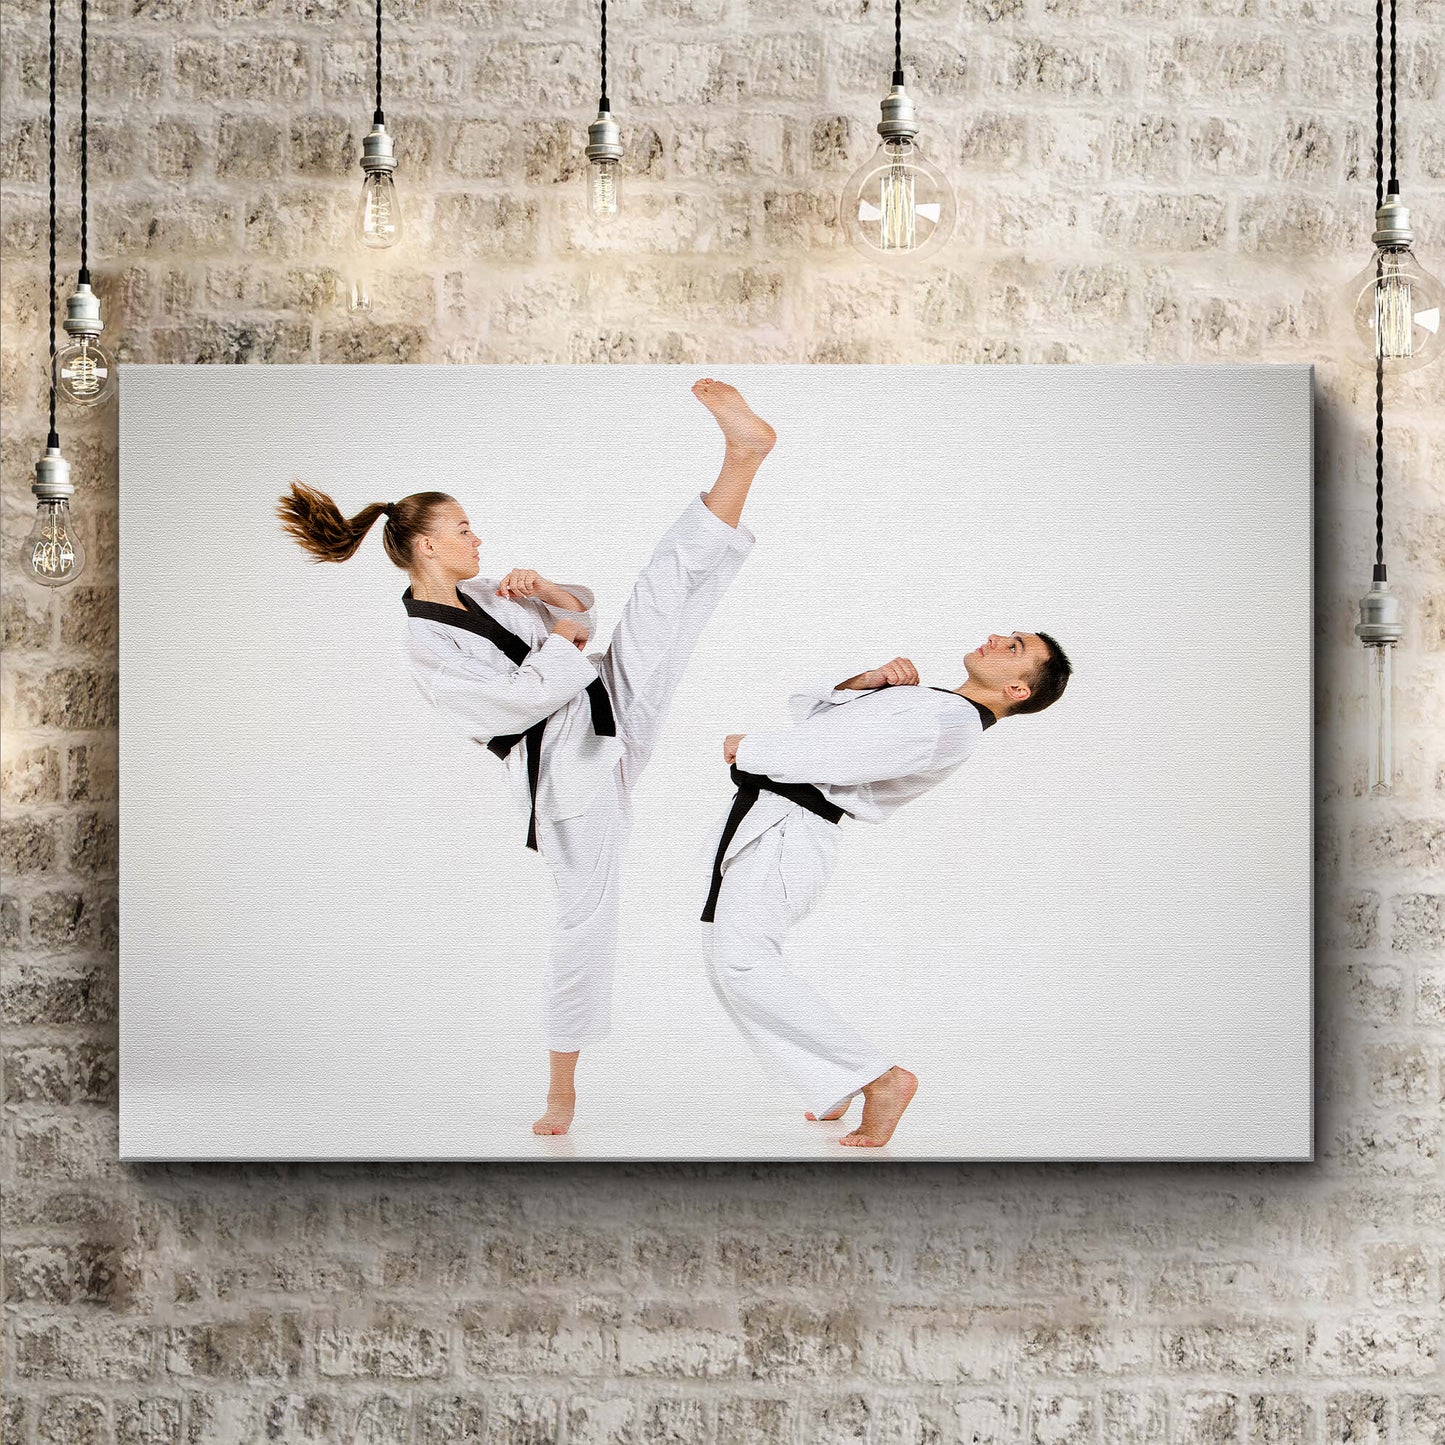 Taekwondo Kick Canvas Wall Art - Image by Tailored Canvases